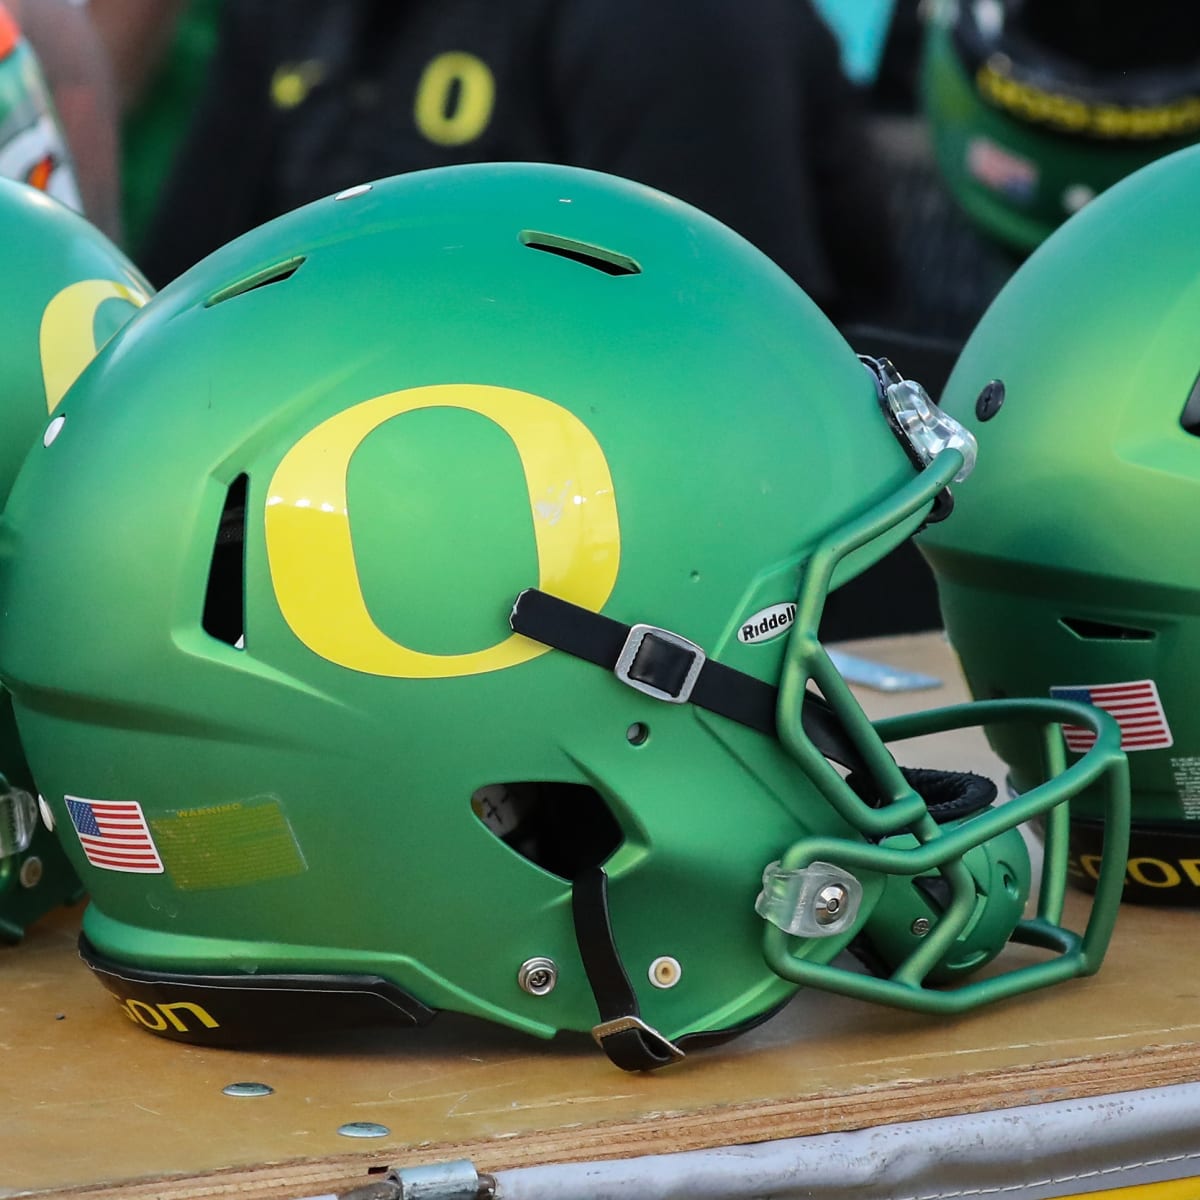 Oregon gets new helmet design and Apple Green and Gold unis for spring game  - Footballscoop